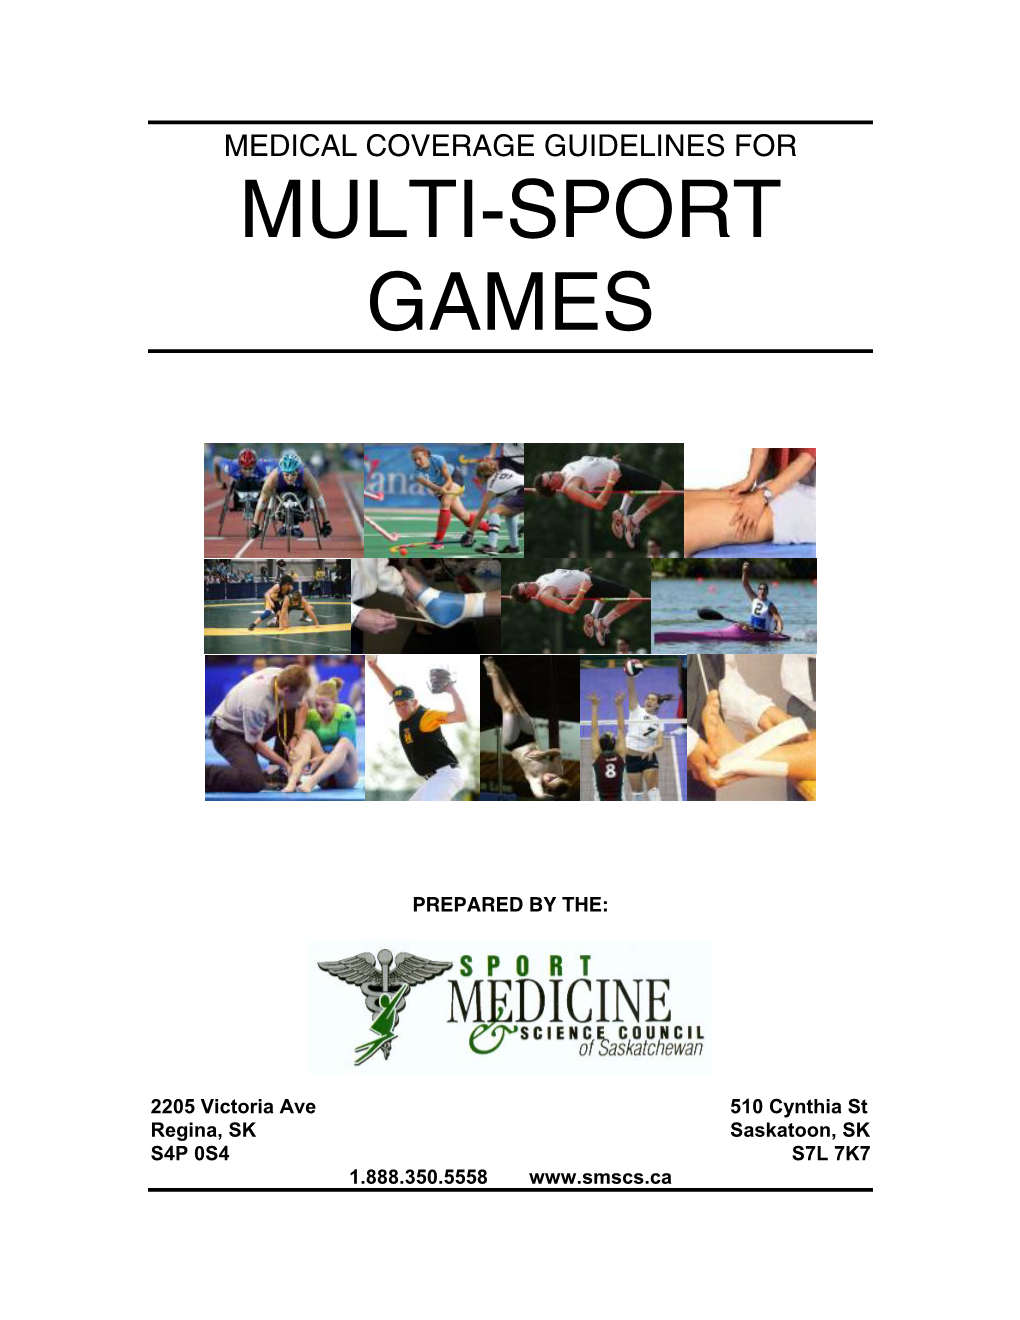 Multi-Sport Games